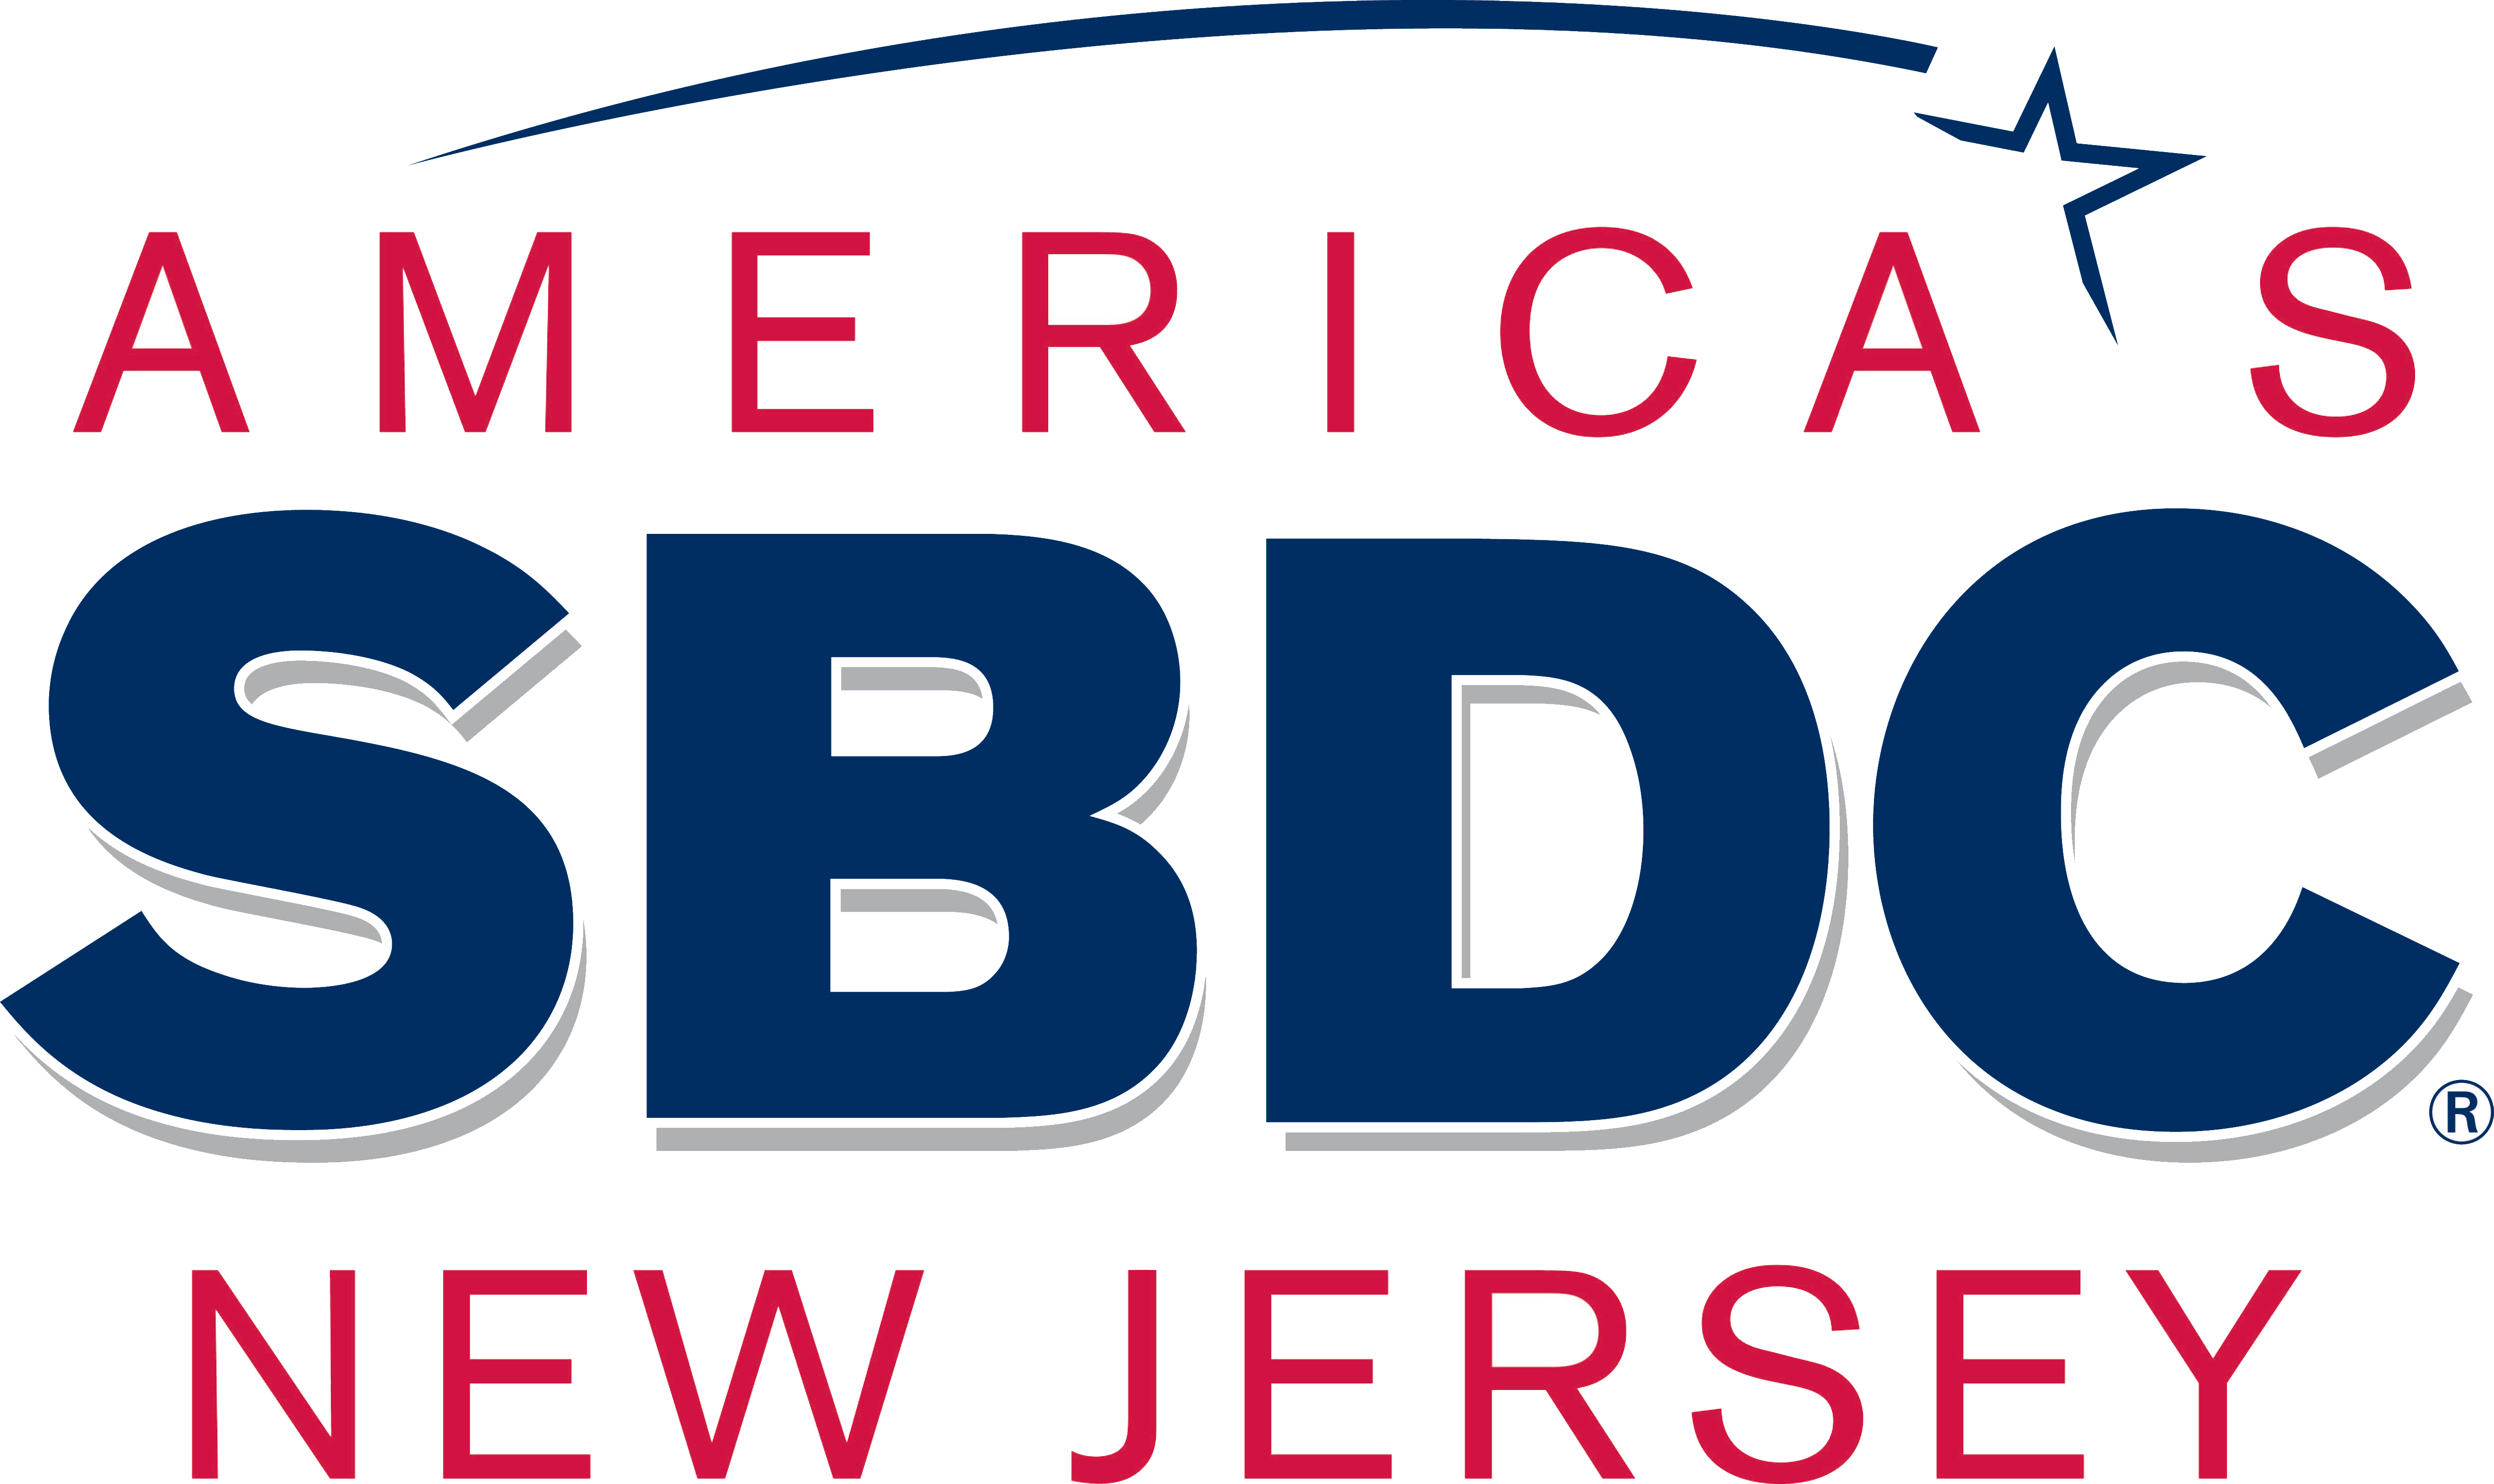 SBDC logo